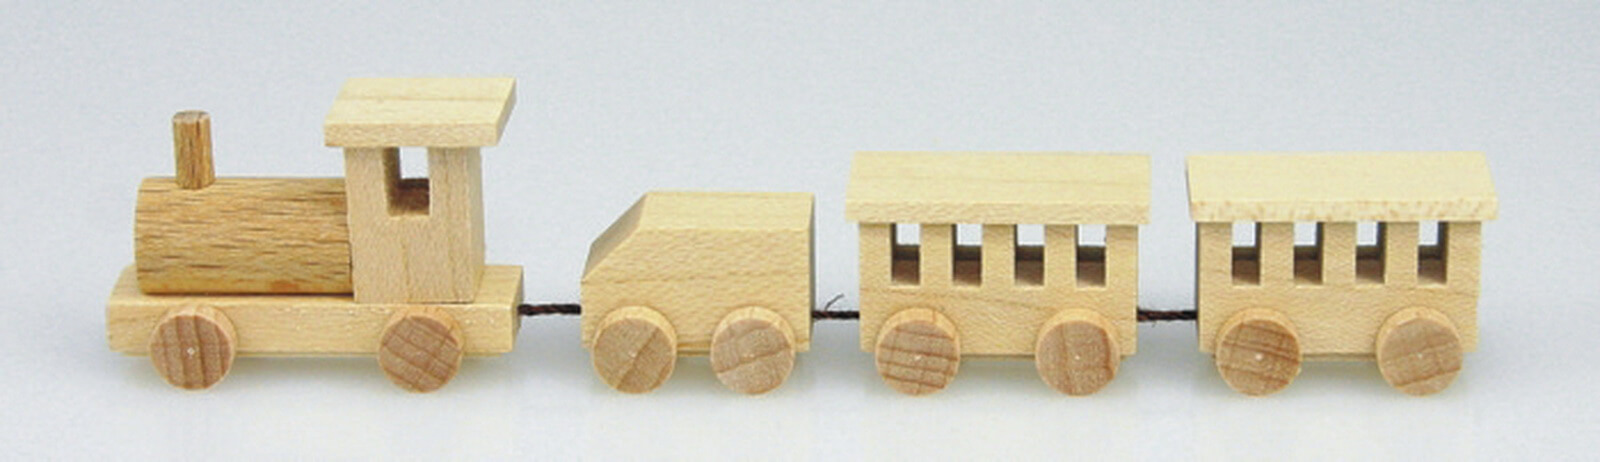 Sandbahn mit Anhänger 40cm NEU Erzgebirge Spielzeug Holzbahn Eisenbahn Zug Holz